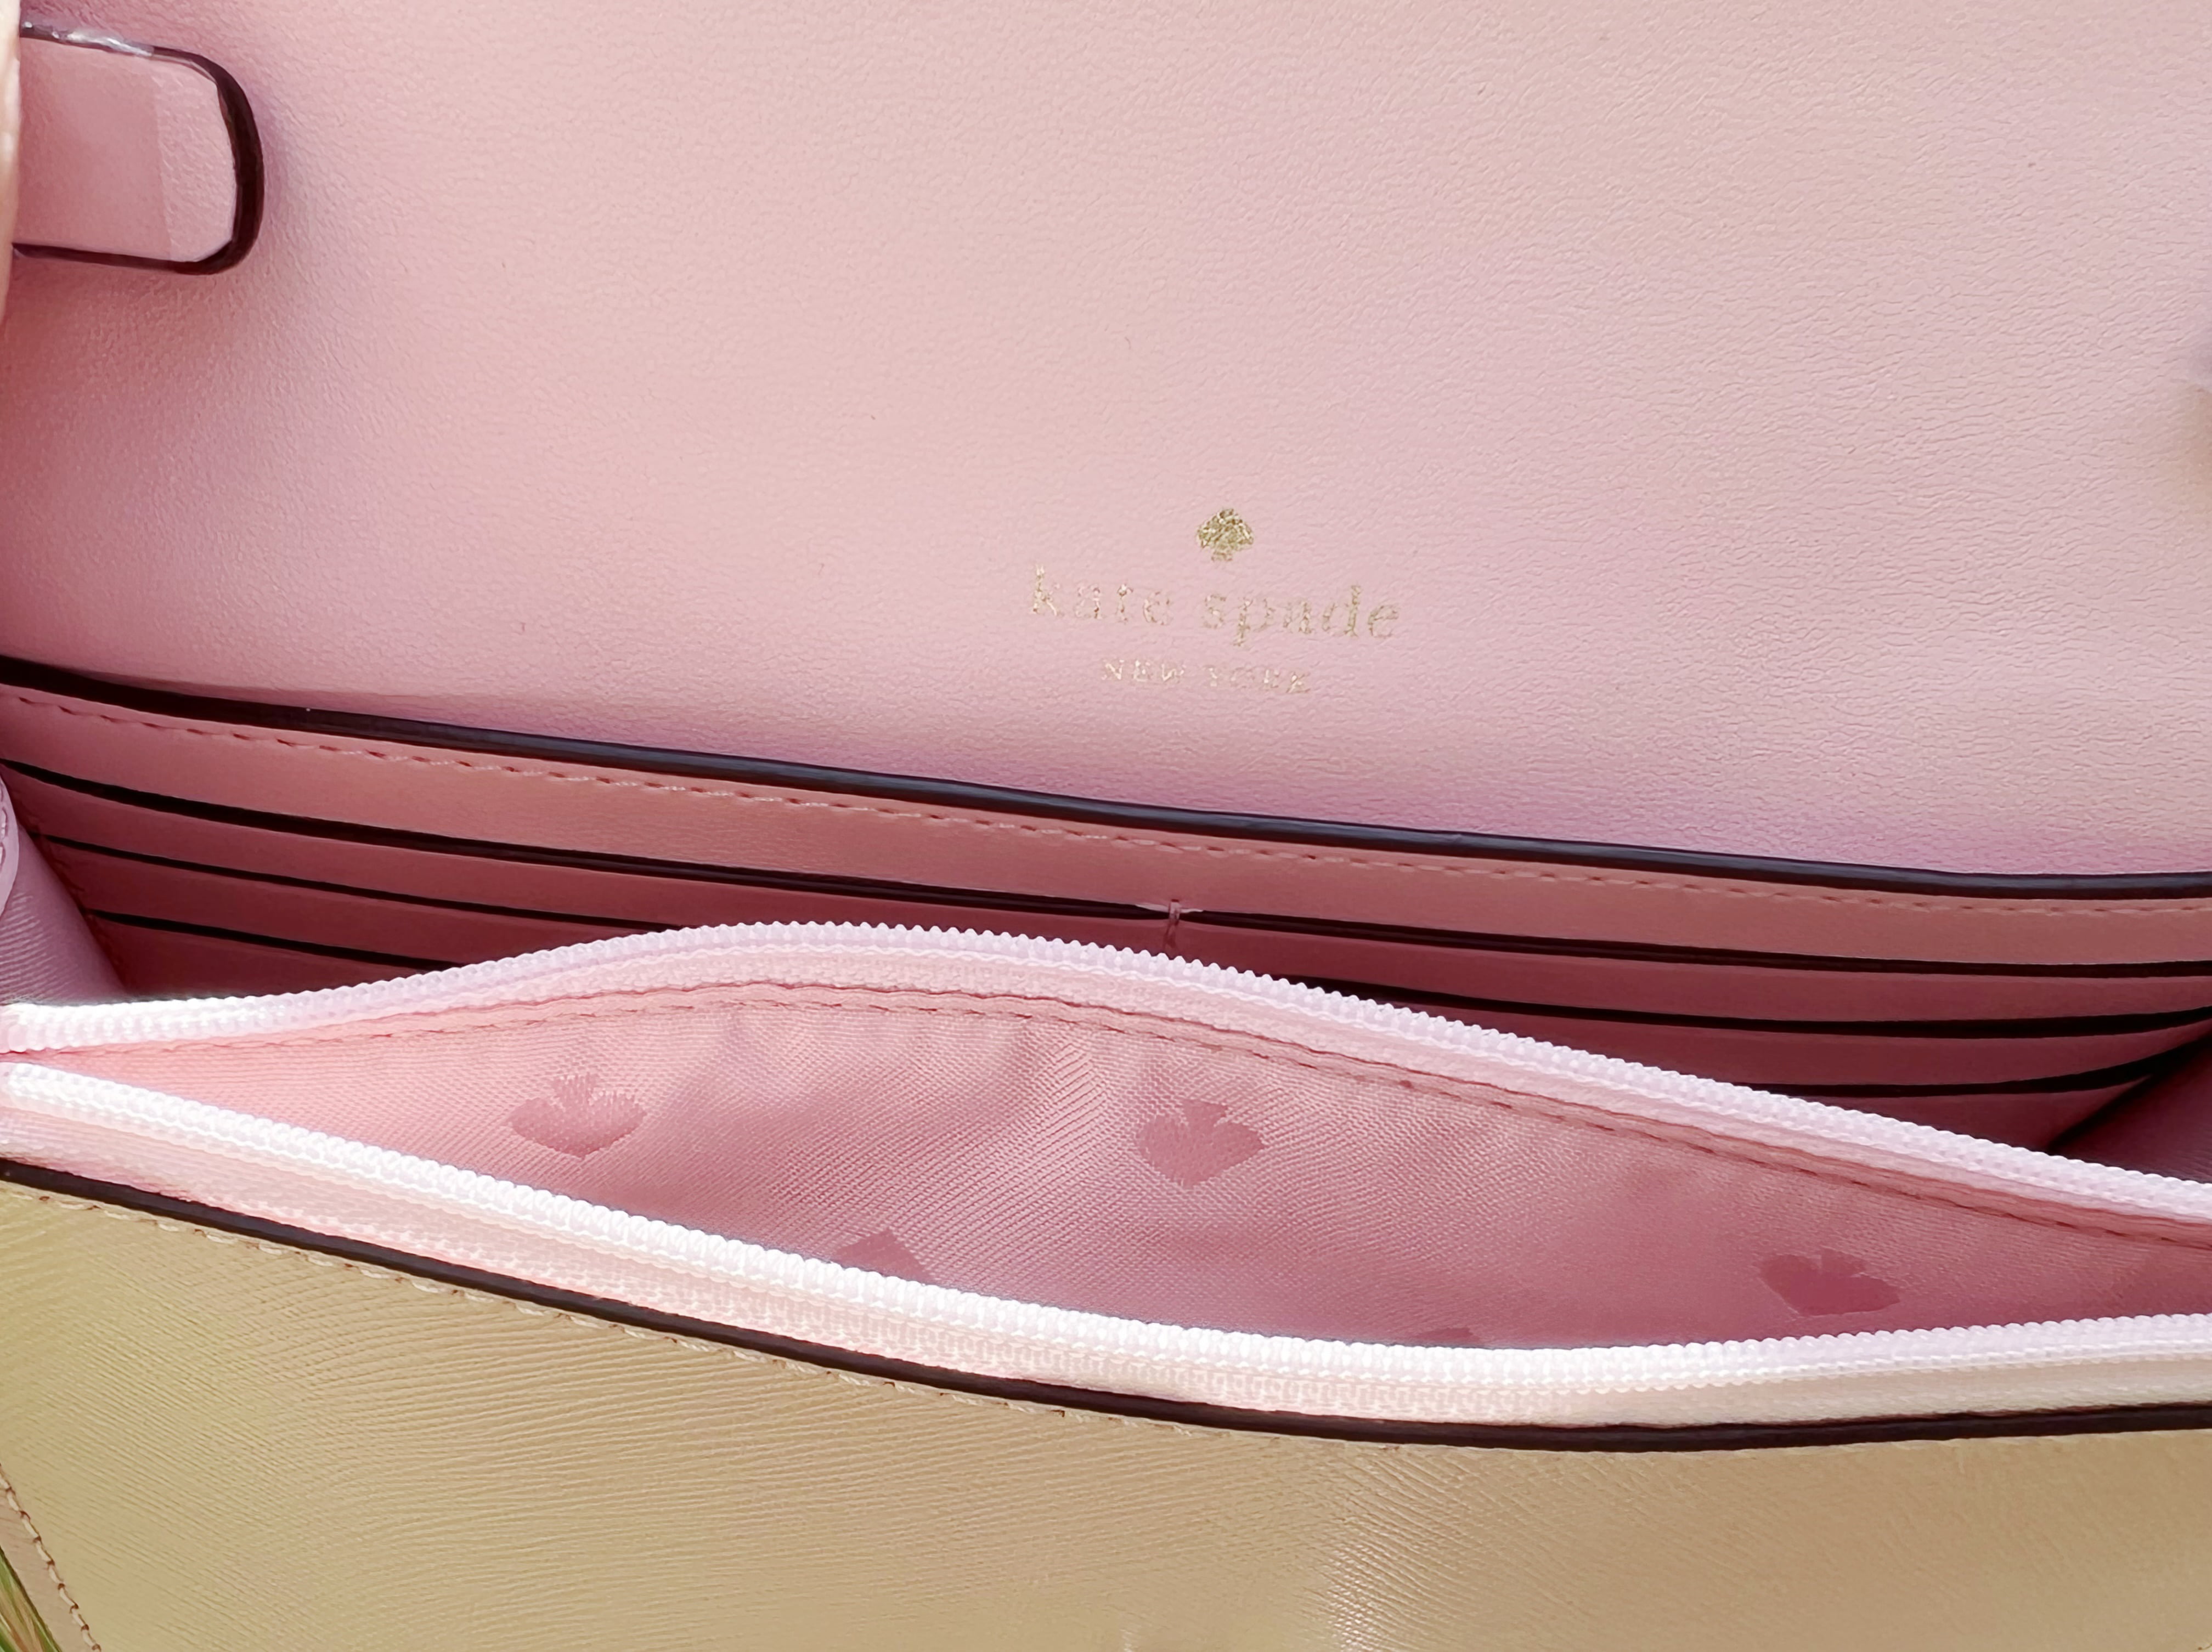 Kate Spade Pink Saffiano Leather Top Zip Slim Crossbody Bag Kate Spade